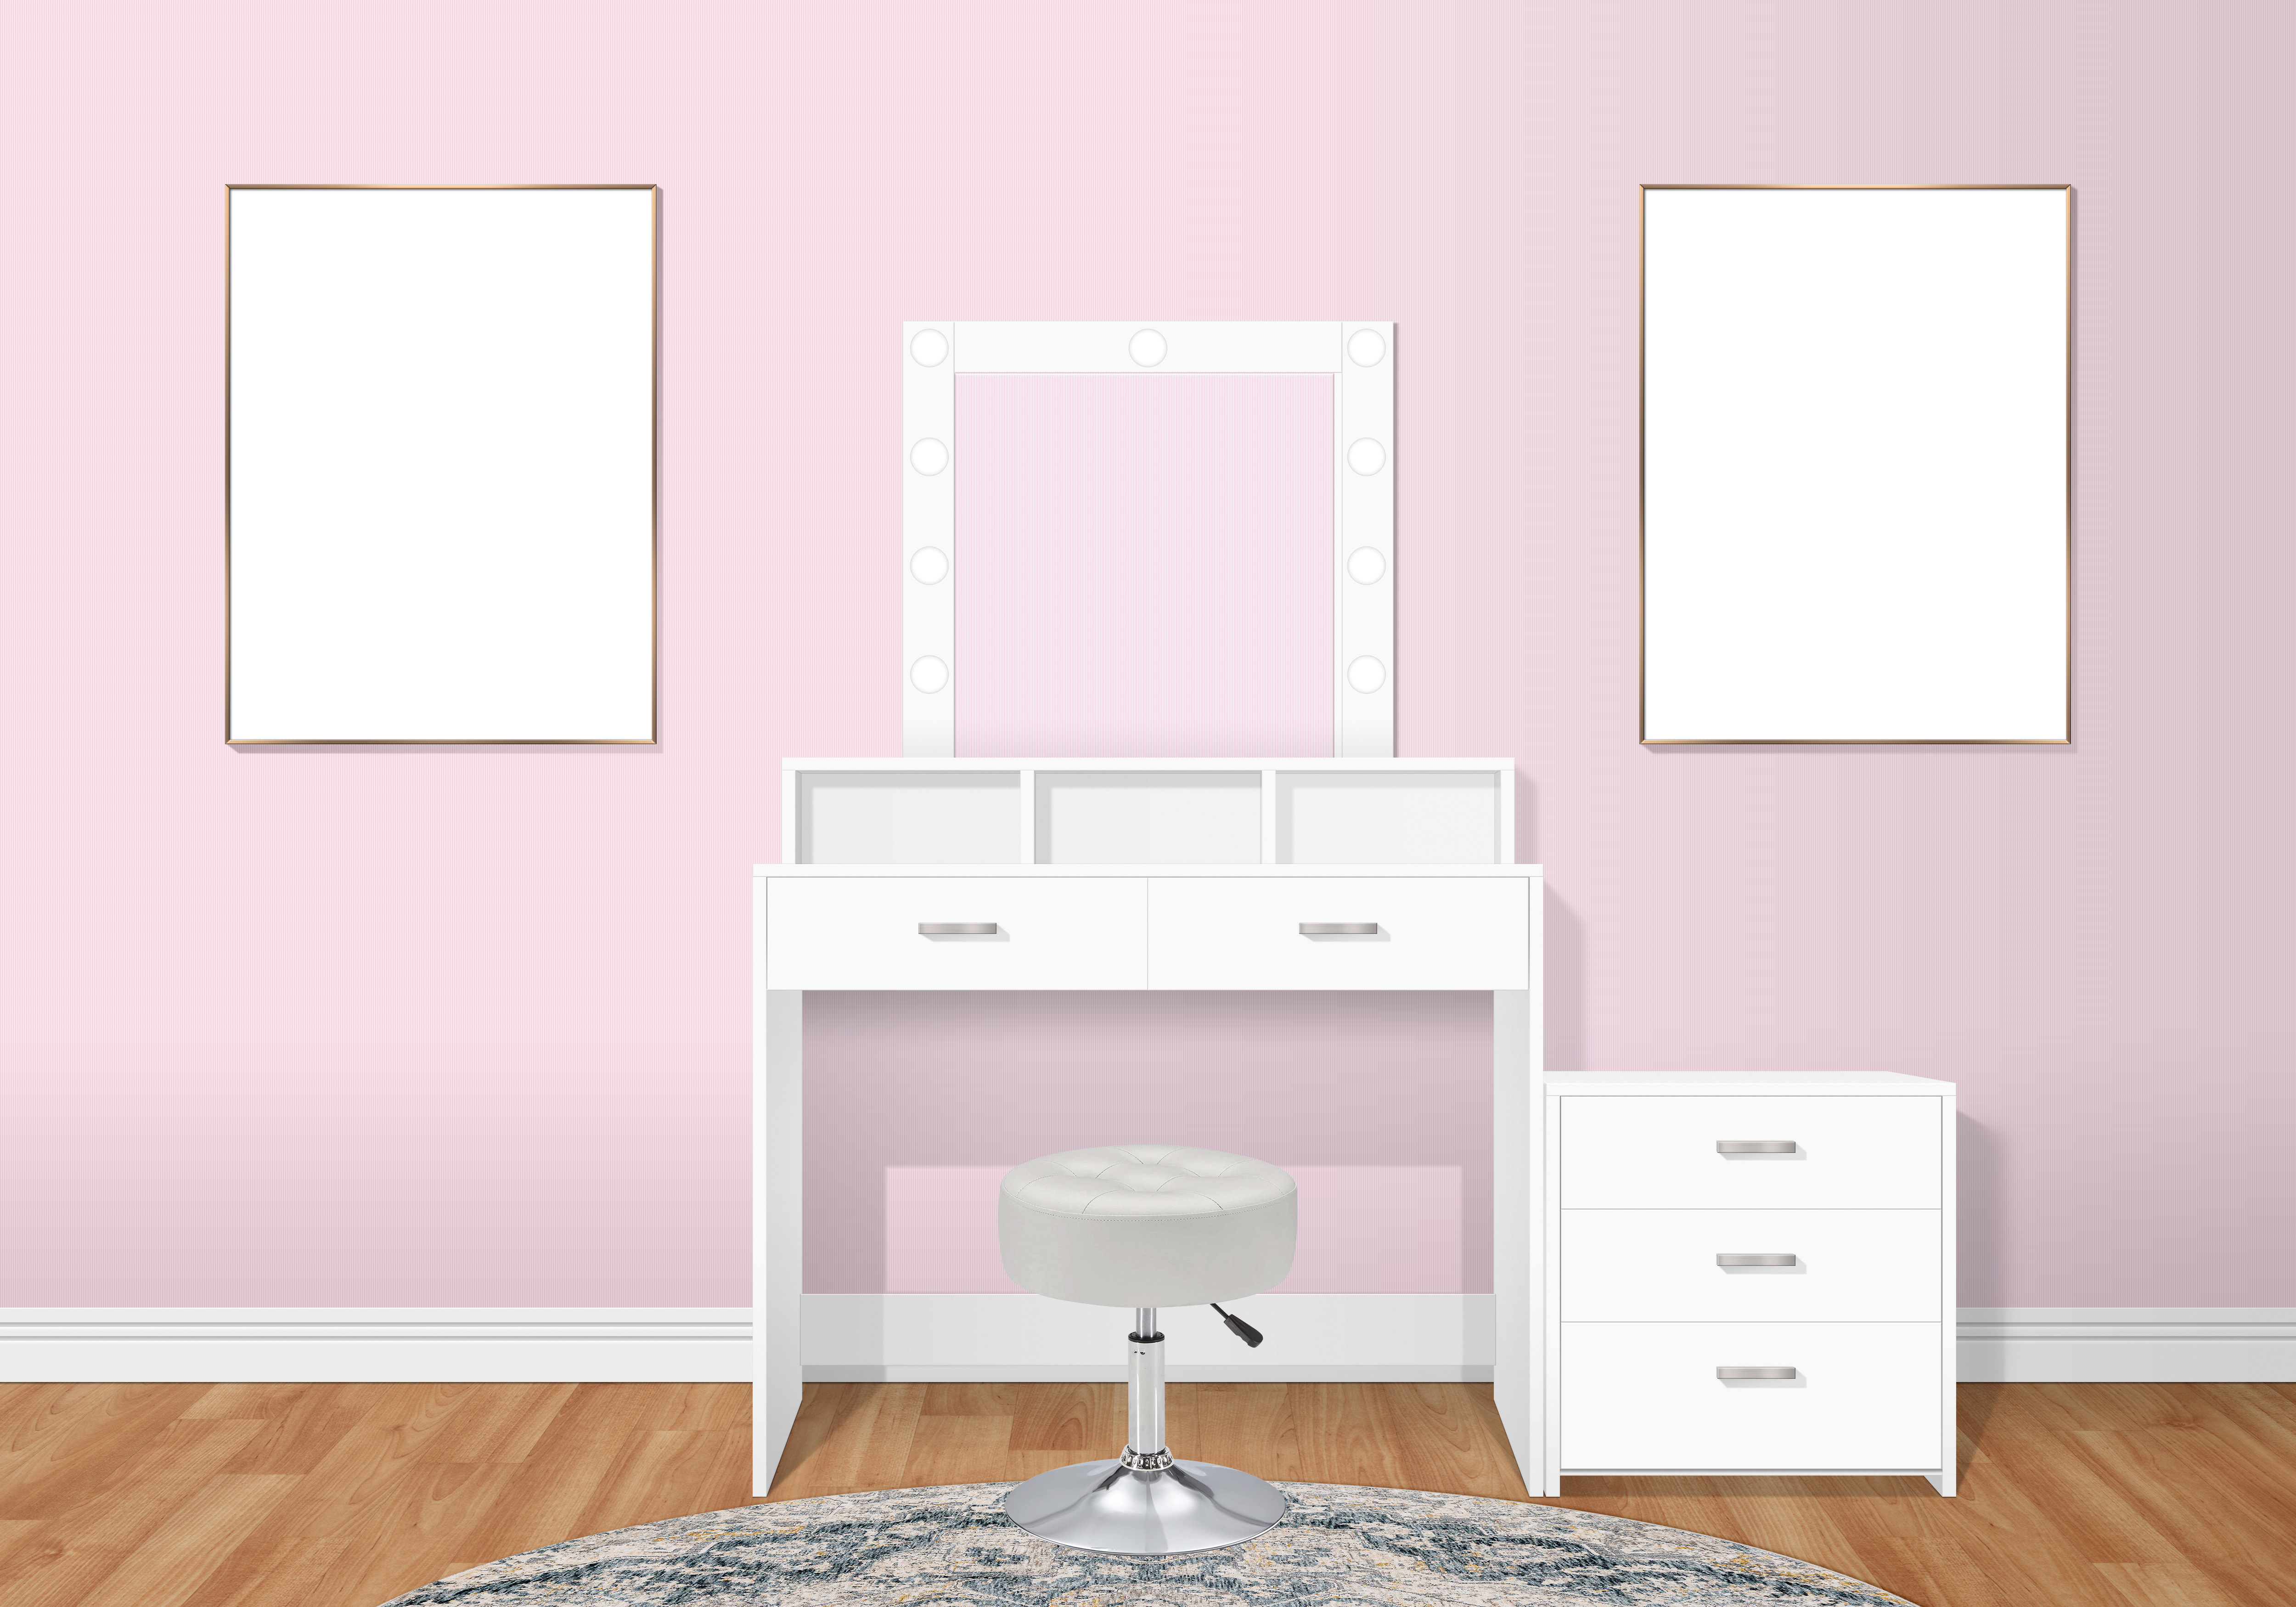 General 5000x3500 vanity table picture frames interior interior design